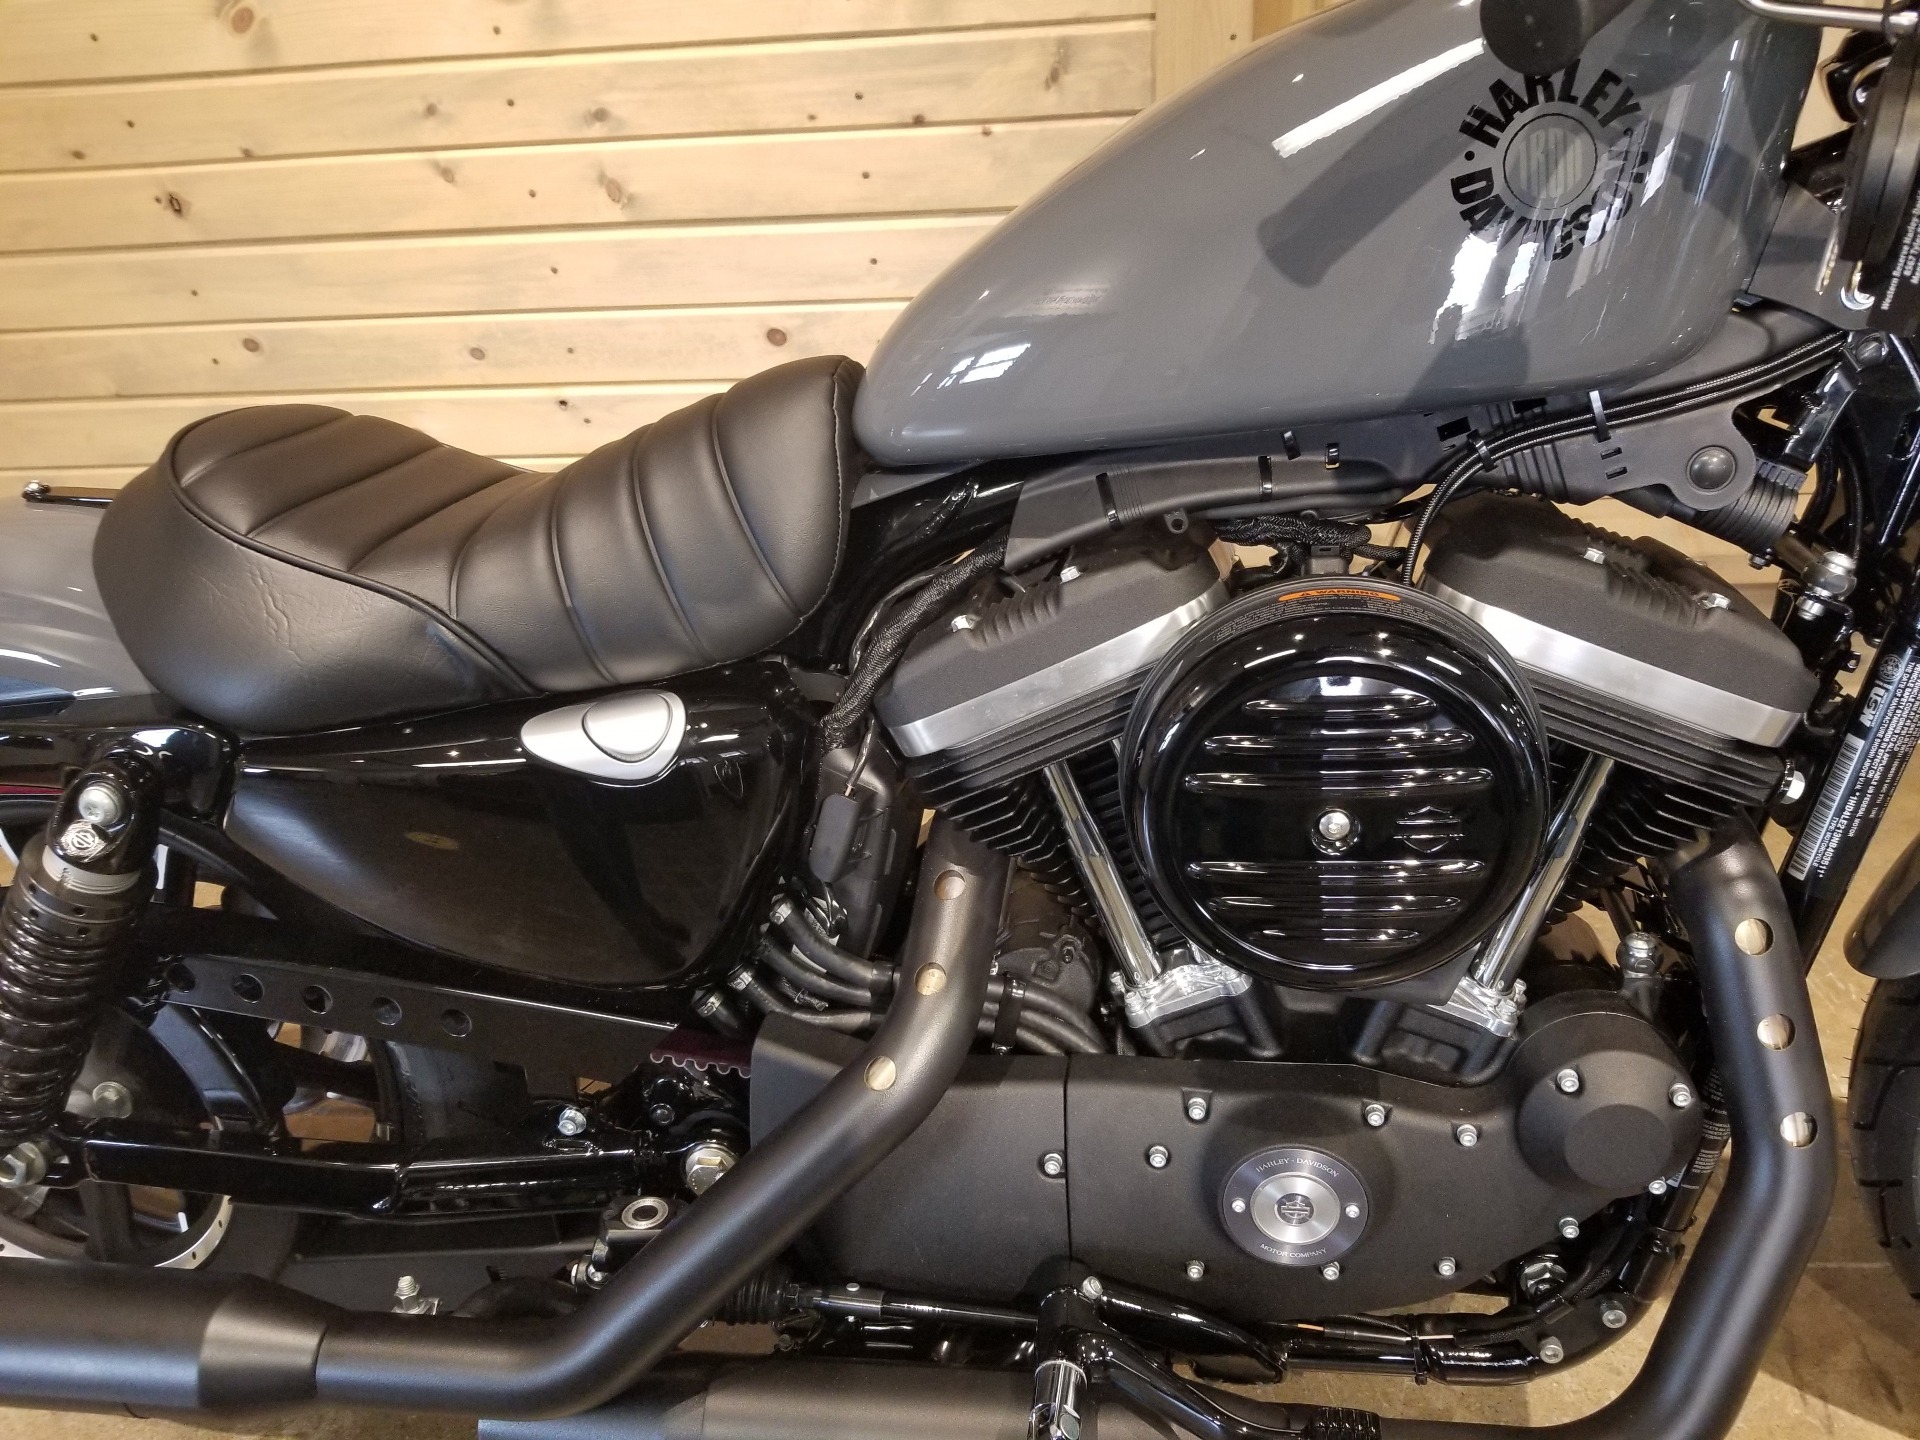 2022 Harley-Davidson Iron 883™ in Mentor, Ohio - Photo 2